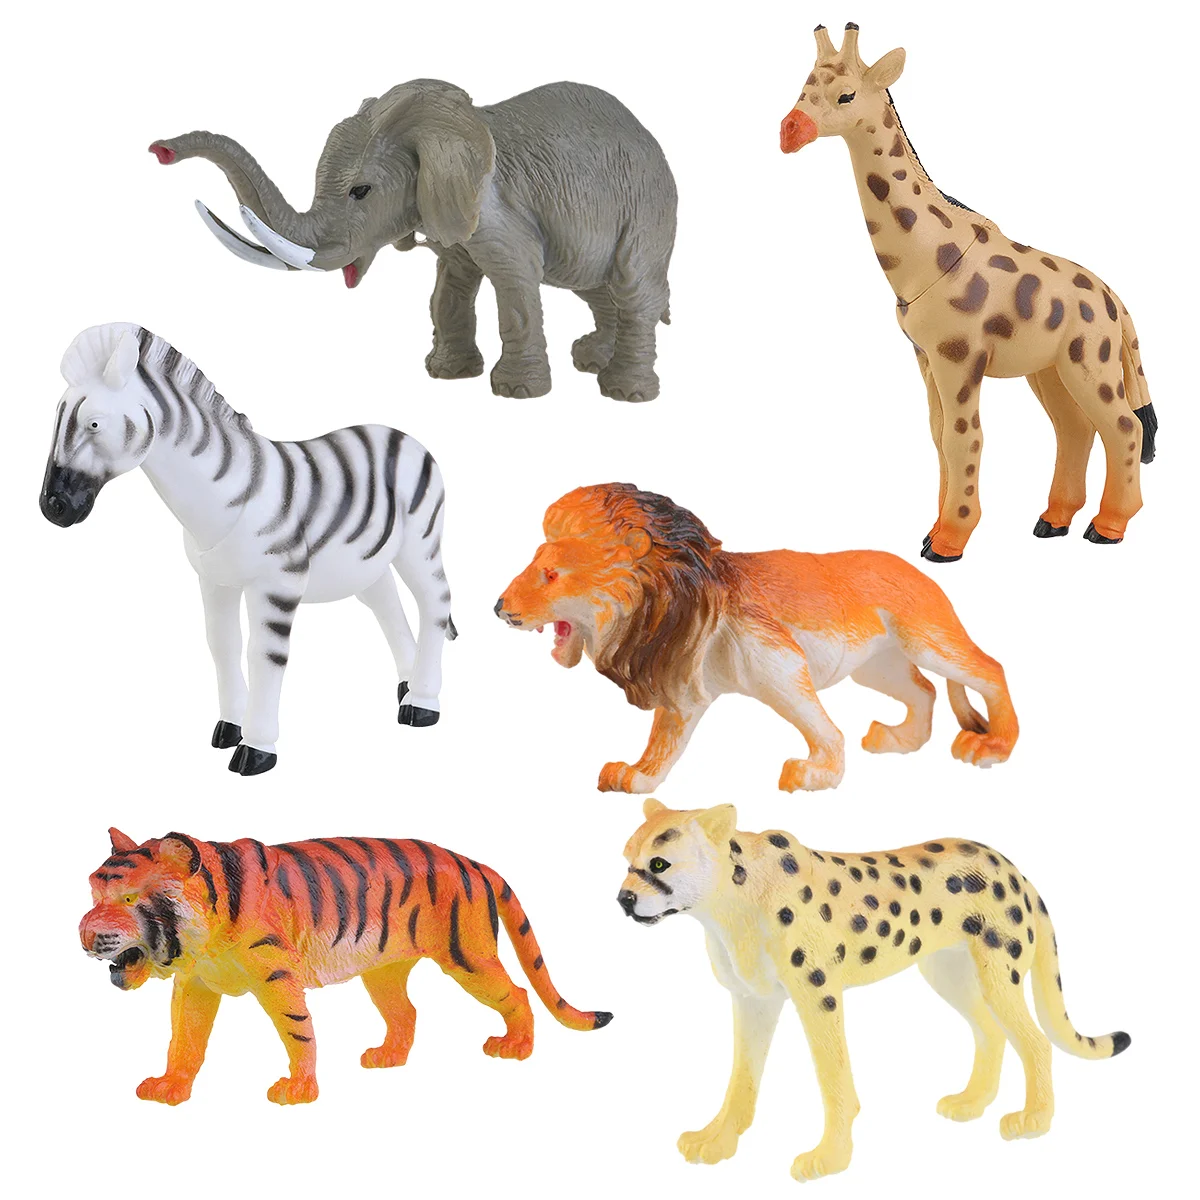 

6Pcs Simulated Wild Animals Model Action Figure Giraffe Zebra Leopard Elephant Model Educational Learning Playset